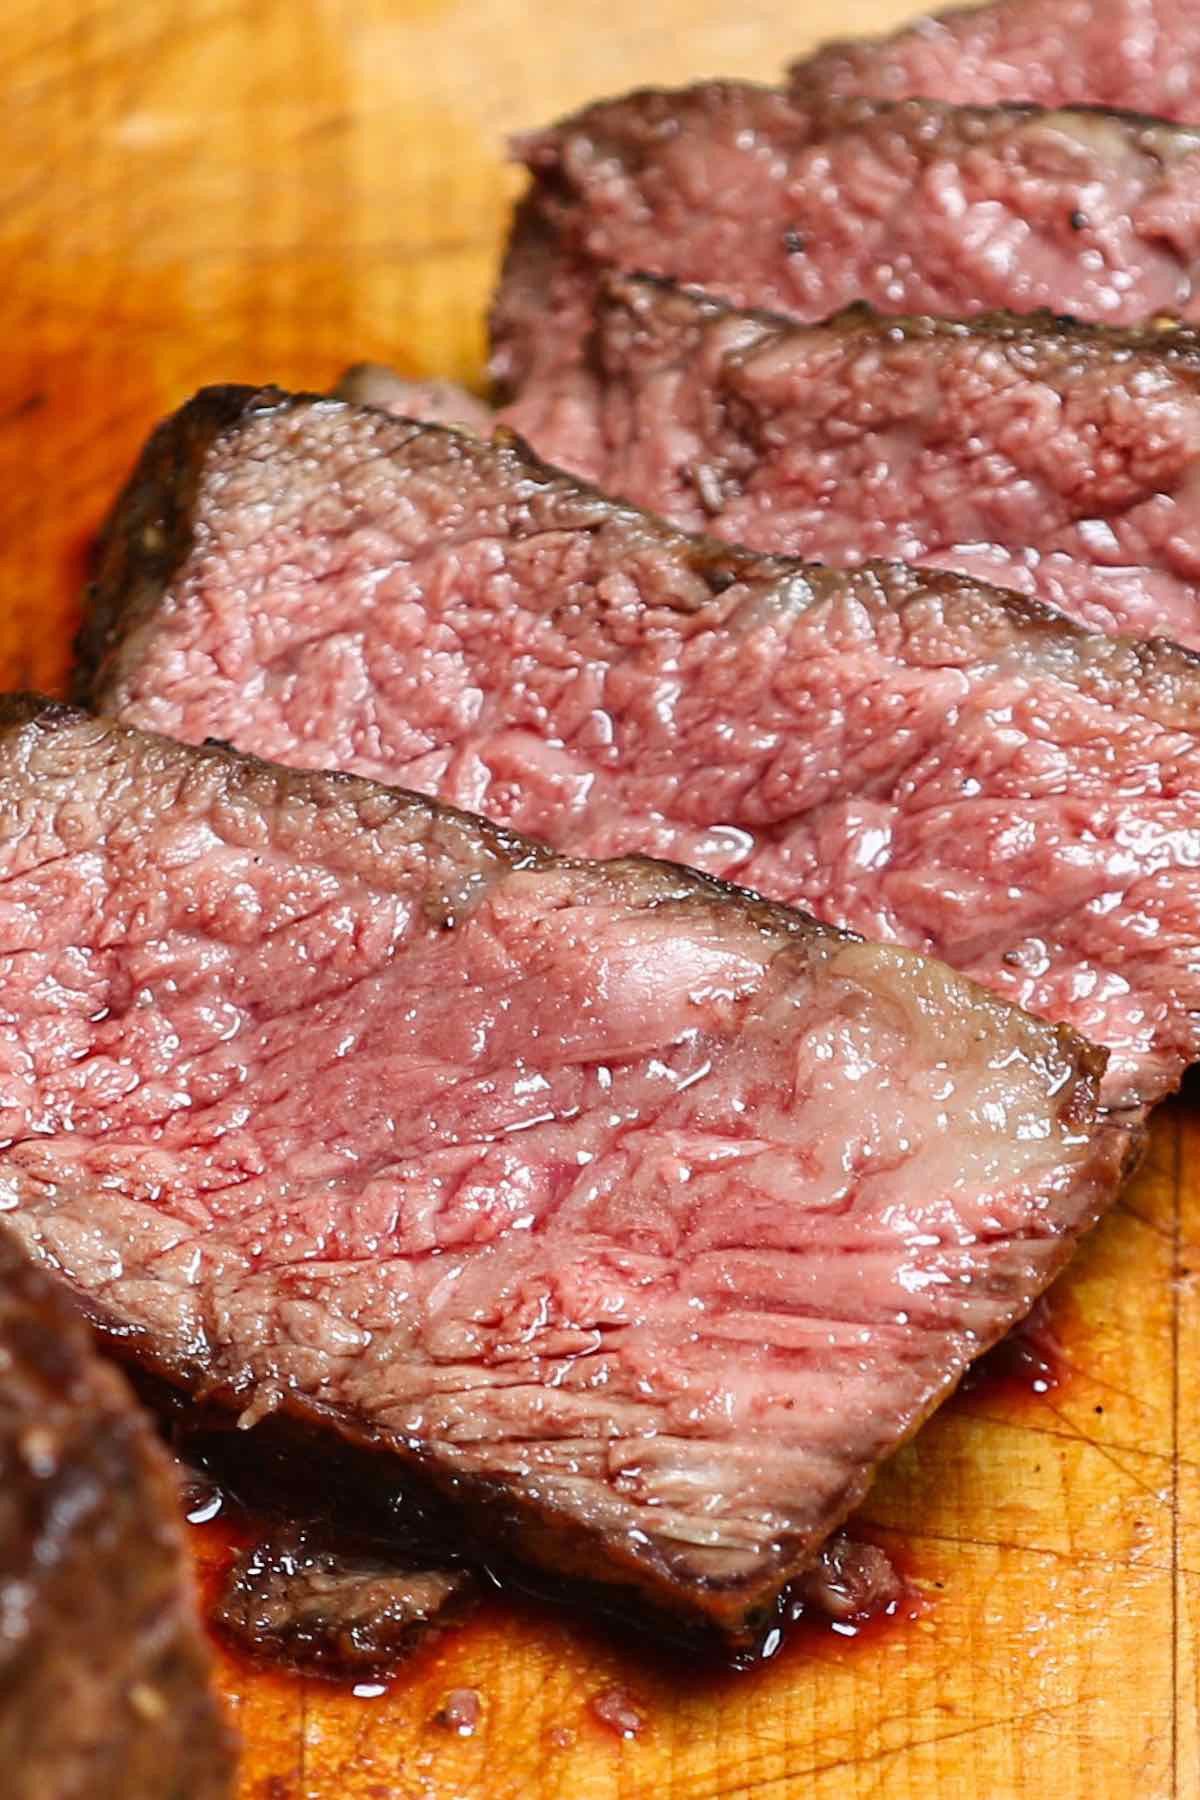 Slices of Denver steak cooked medium